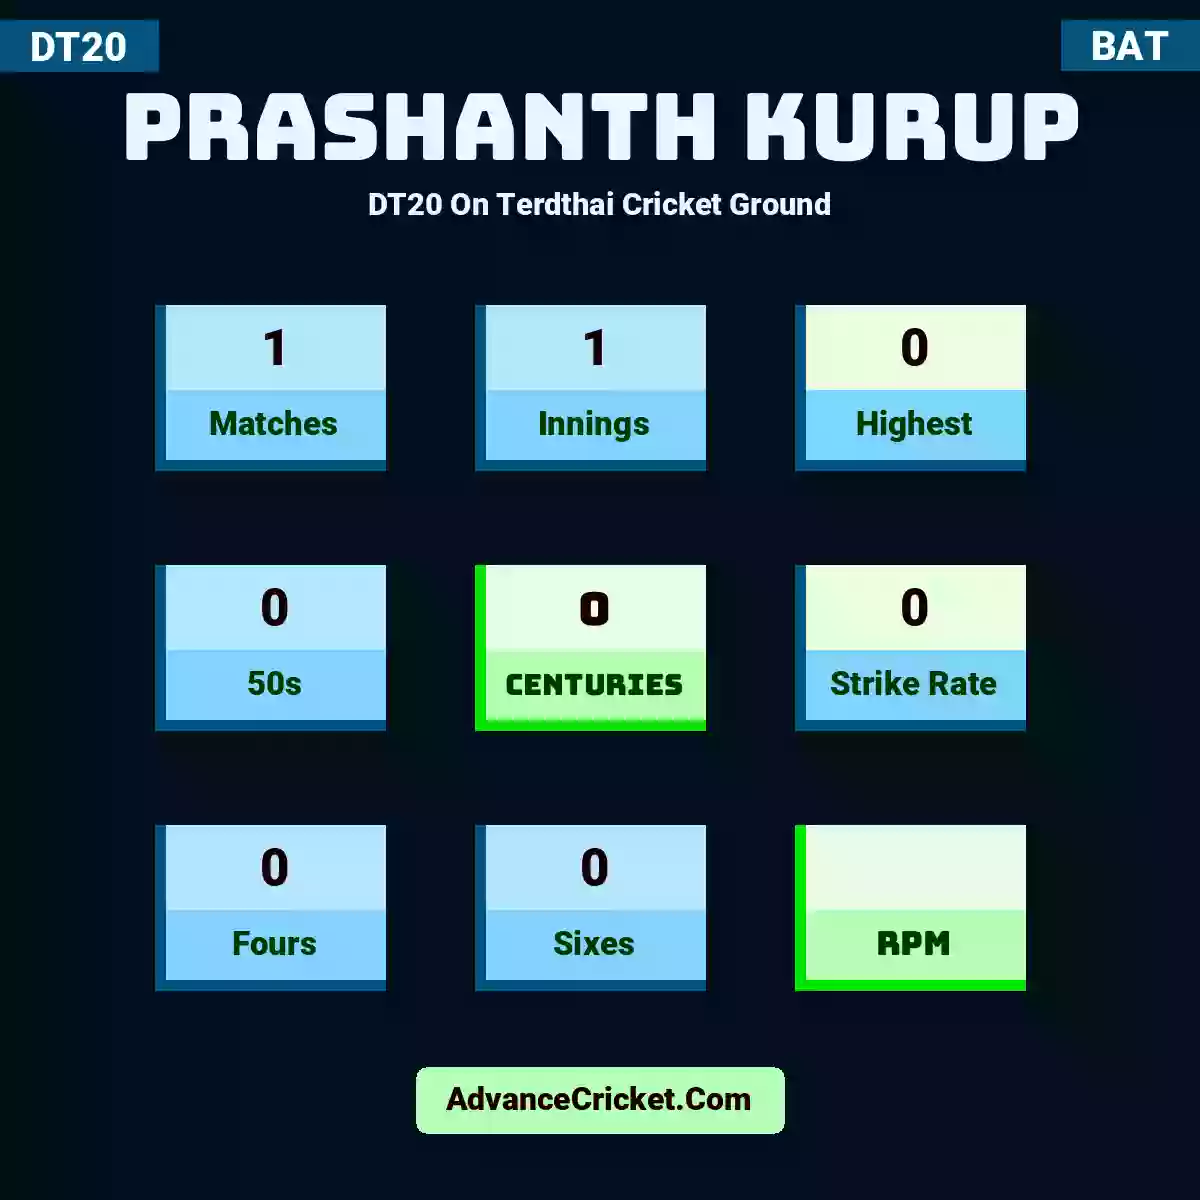 Prashanth Kurup DT20  On Terdthai Cricket Ground, Prashanth Kurup played 1 matches, scored 0 runs as highest, 0 half-centuries, and 0 centuries, with a strike rate of 0. P.Kurup hit 0 fours and 0 sixes.